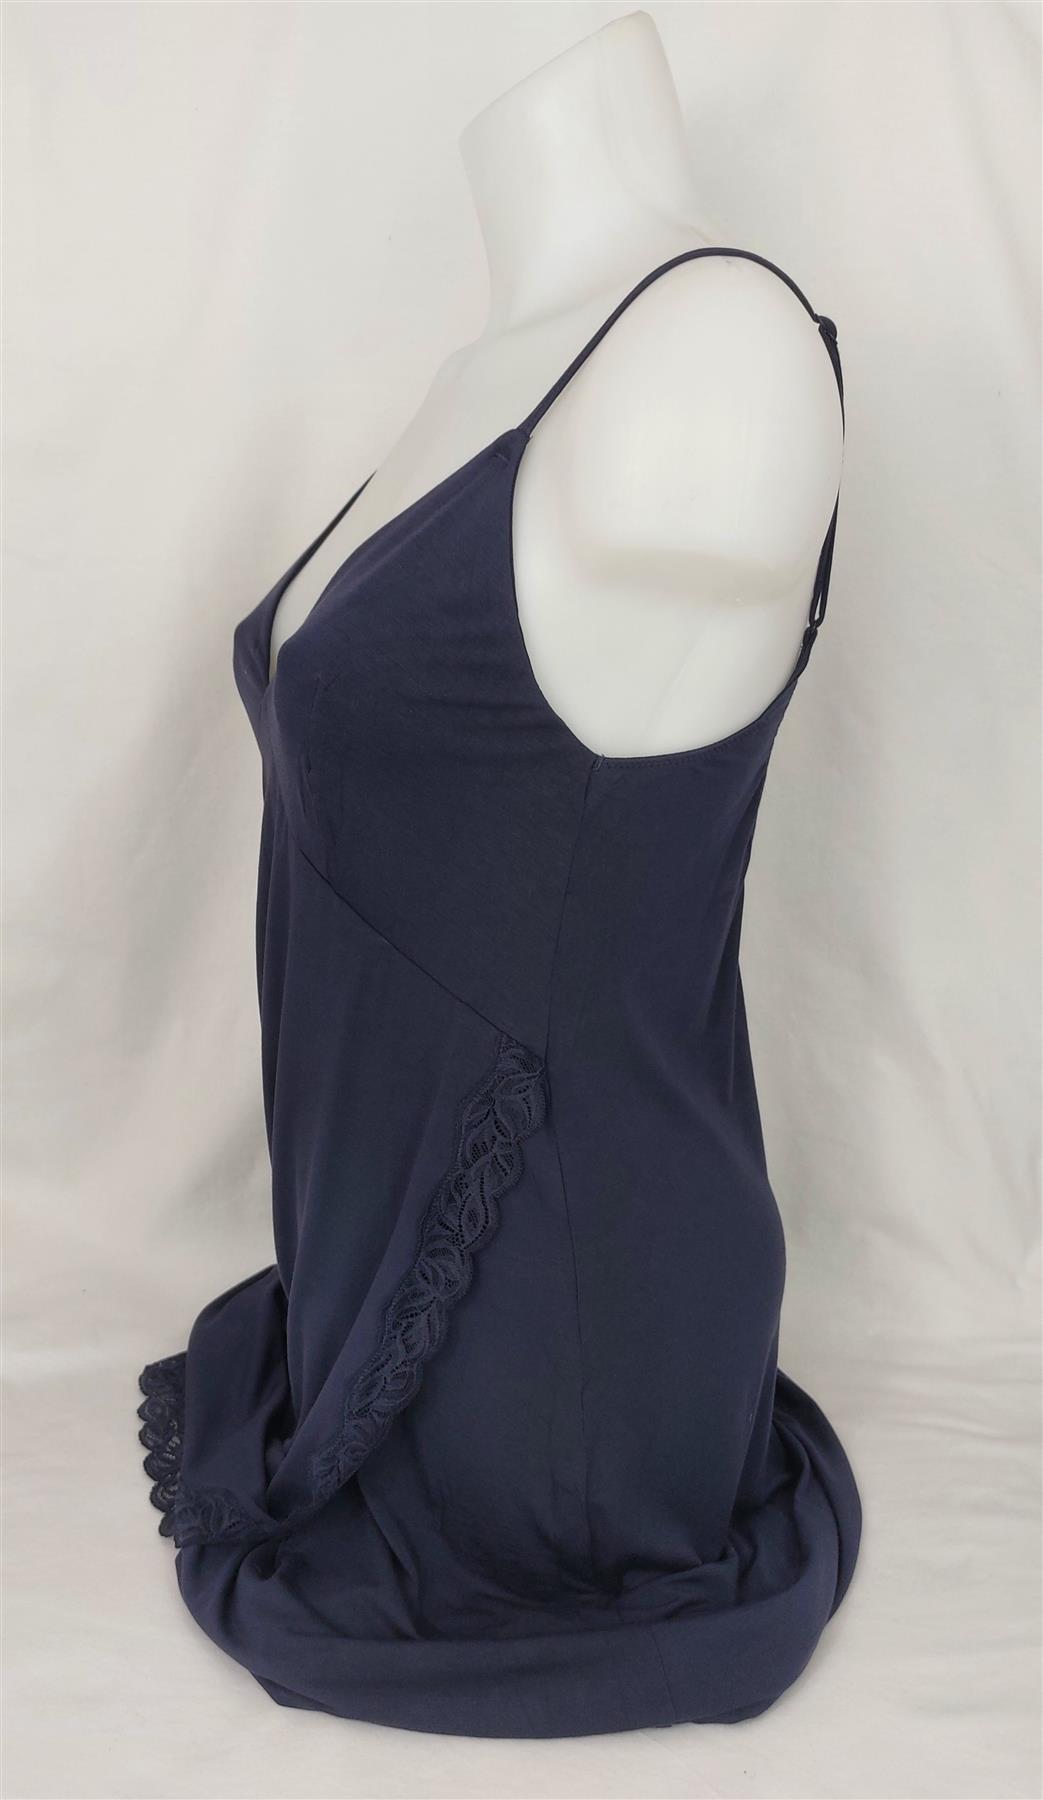 Women's Modal Nightdress Slip Lace Trim Wrap Supersoft Brand New